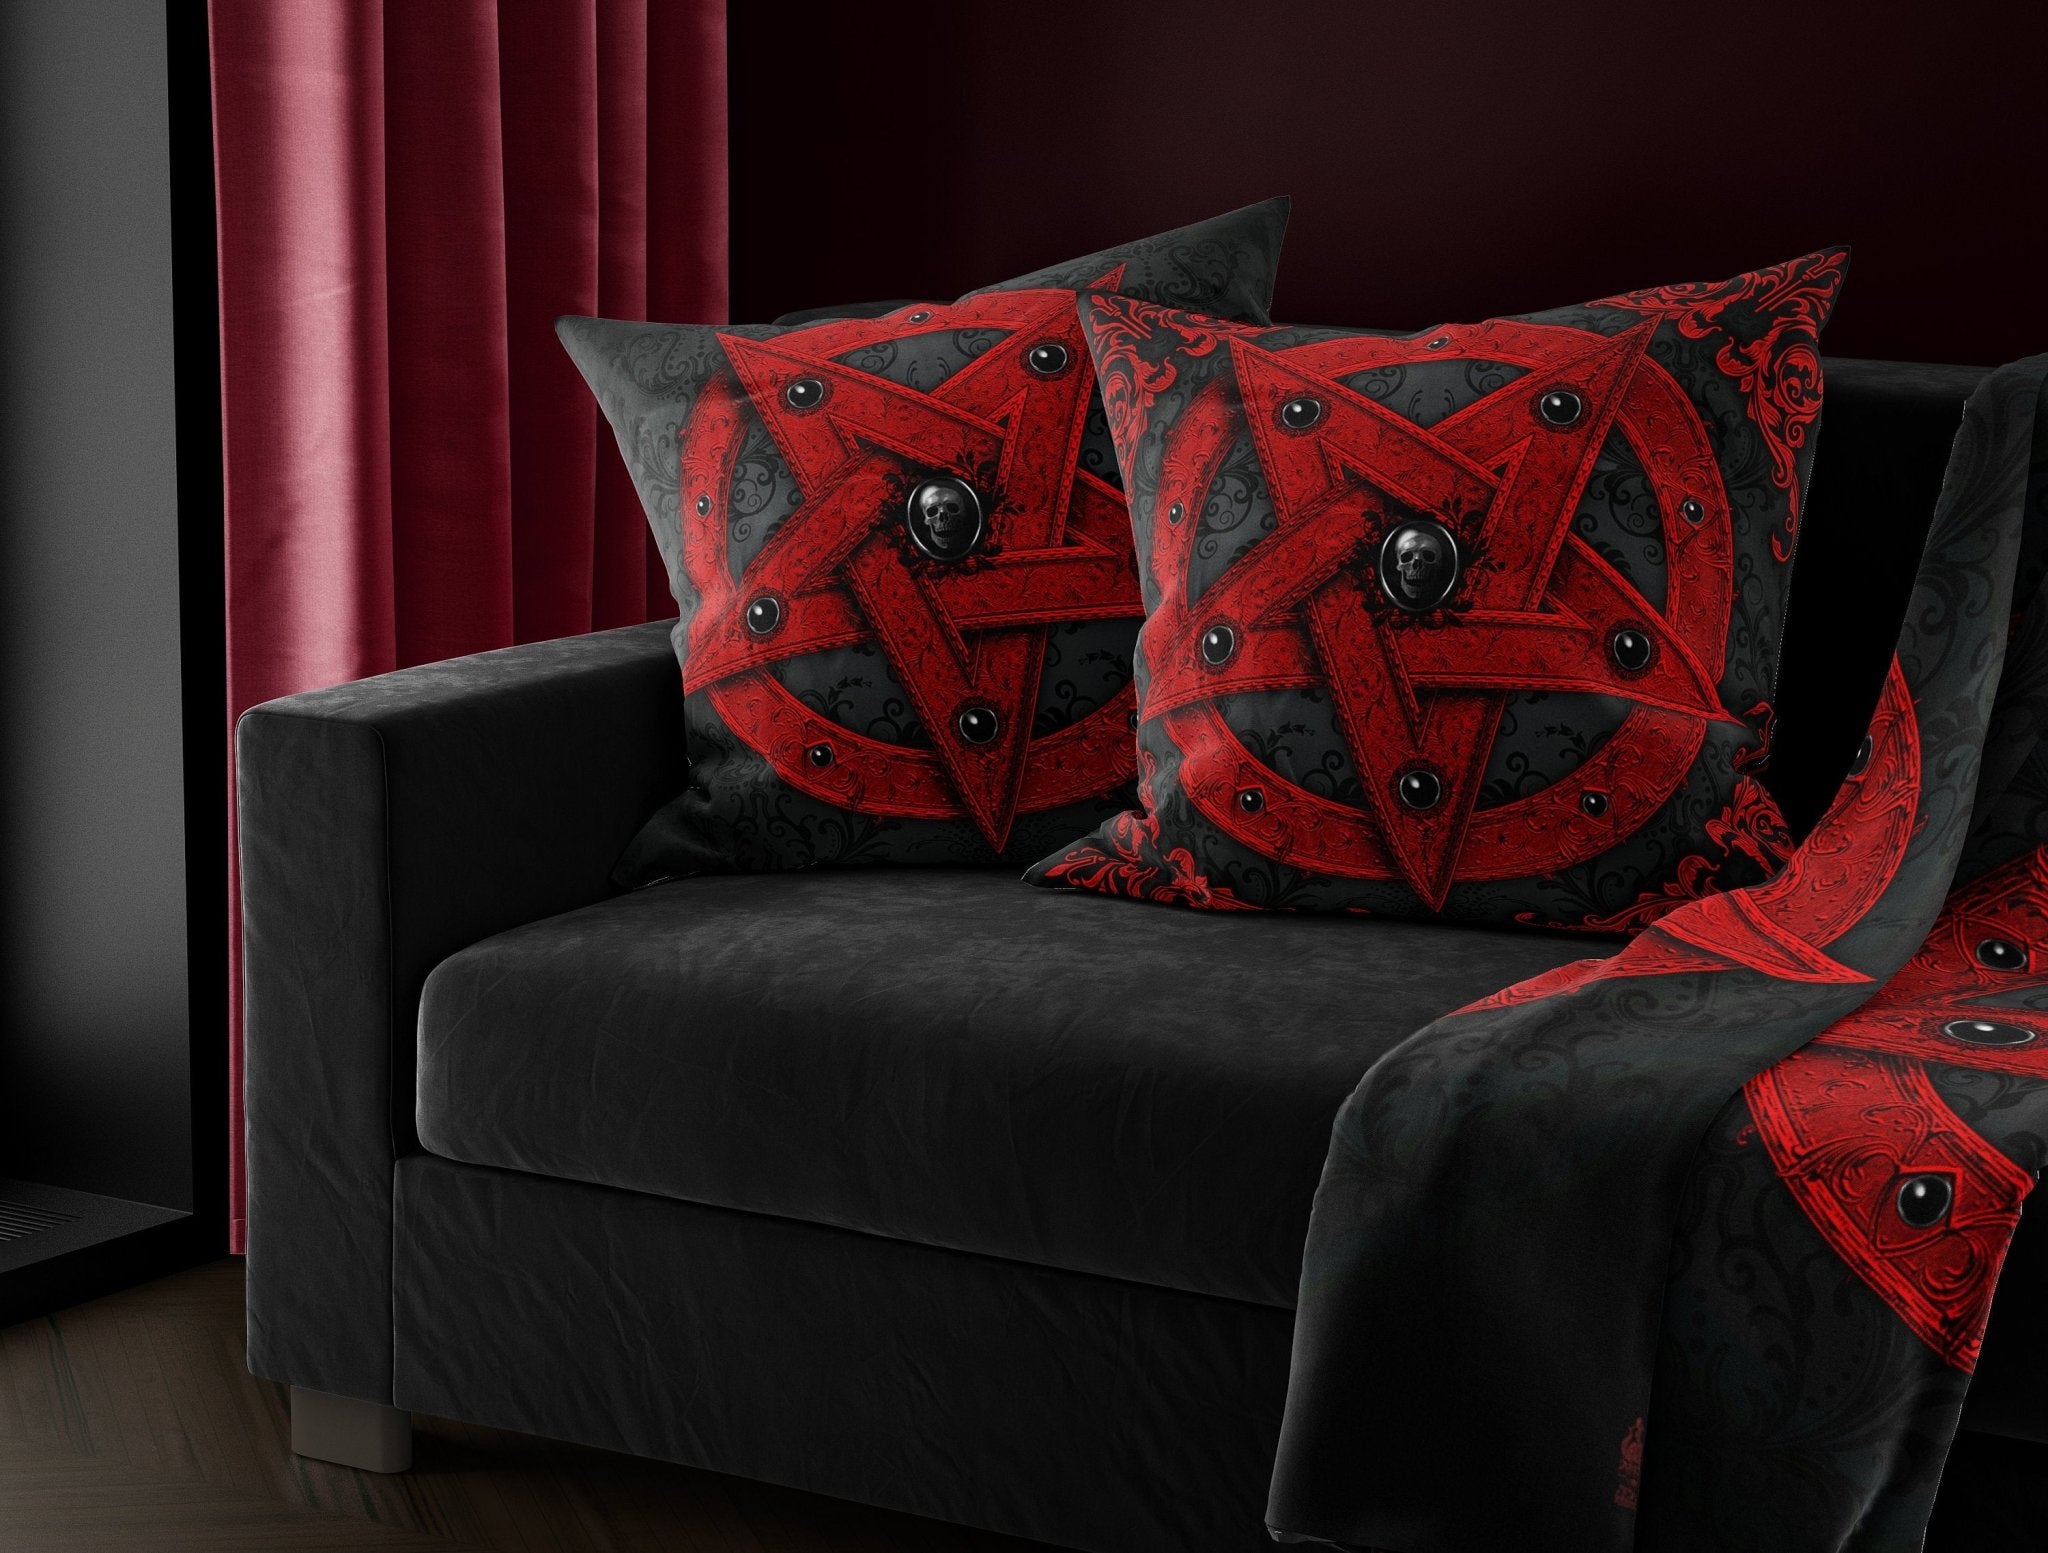 Pentagram Throw Pillow, Decorative Accent Cushion, Satanic Home, Goth Art, Alternative Decor - Red - Abysm Internal